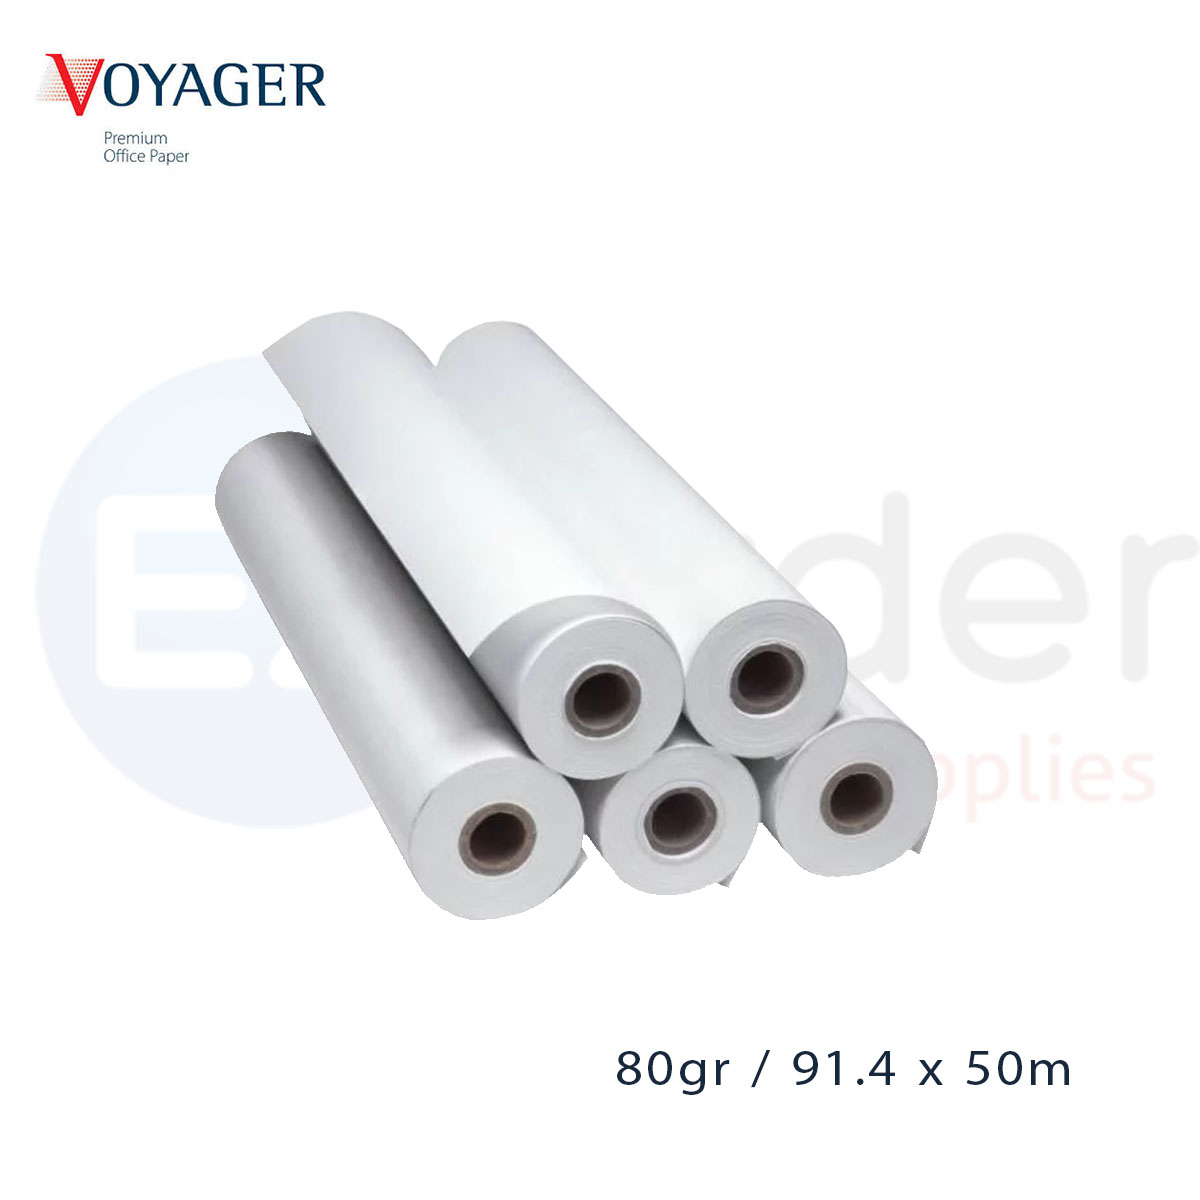 +Plotter roll (91.4cmx50m) 80gr, A0+,  VOYAGER